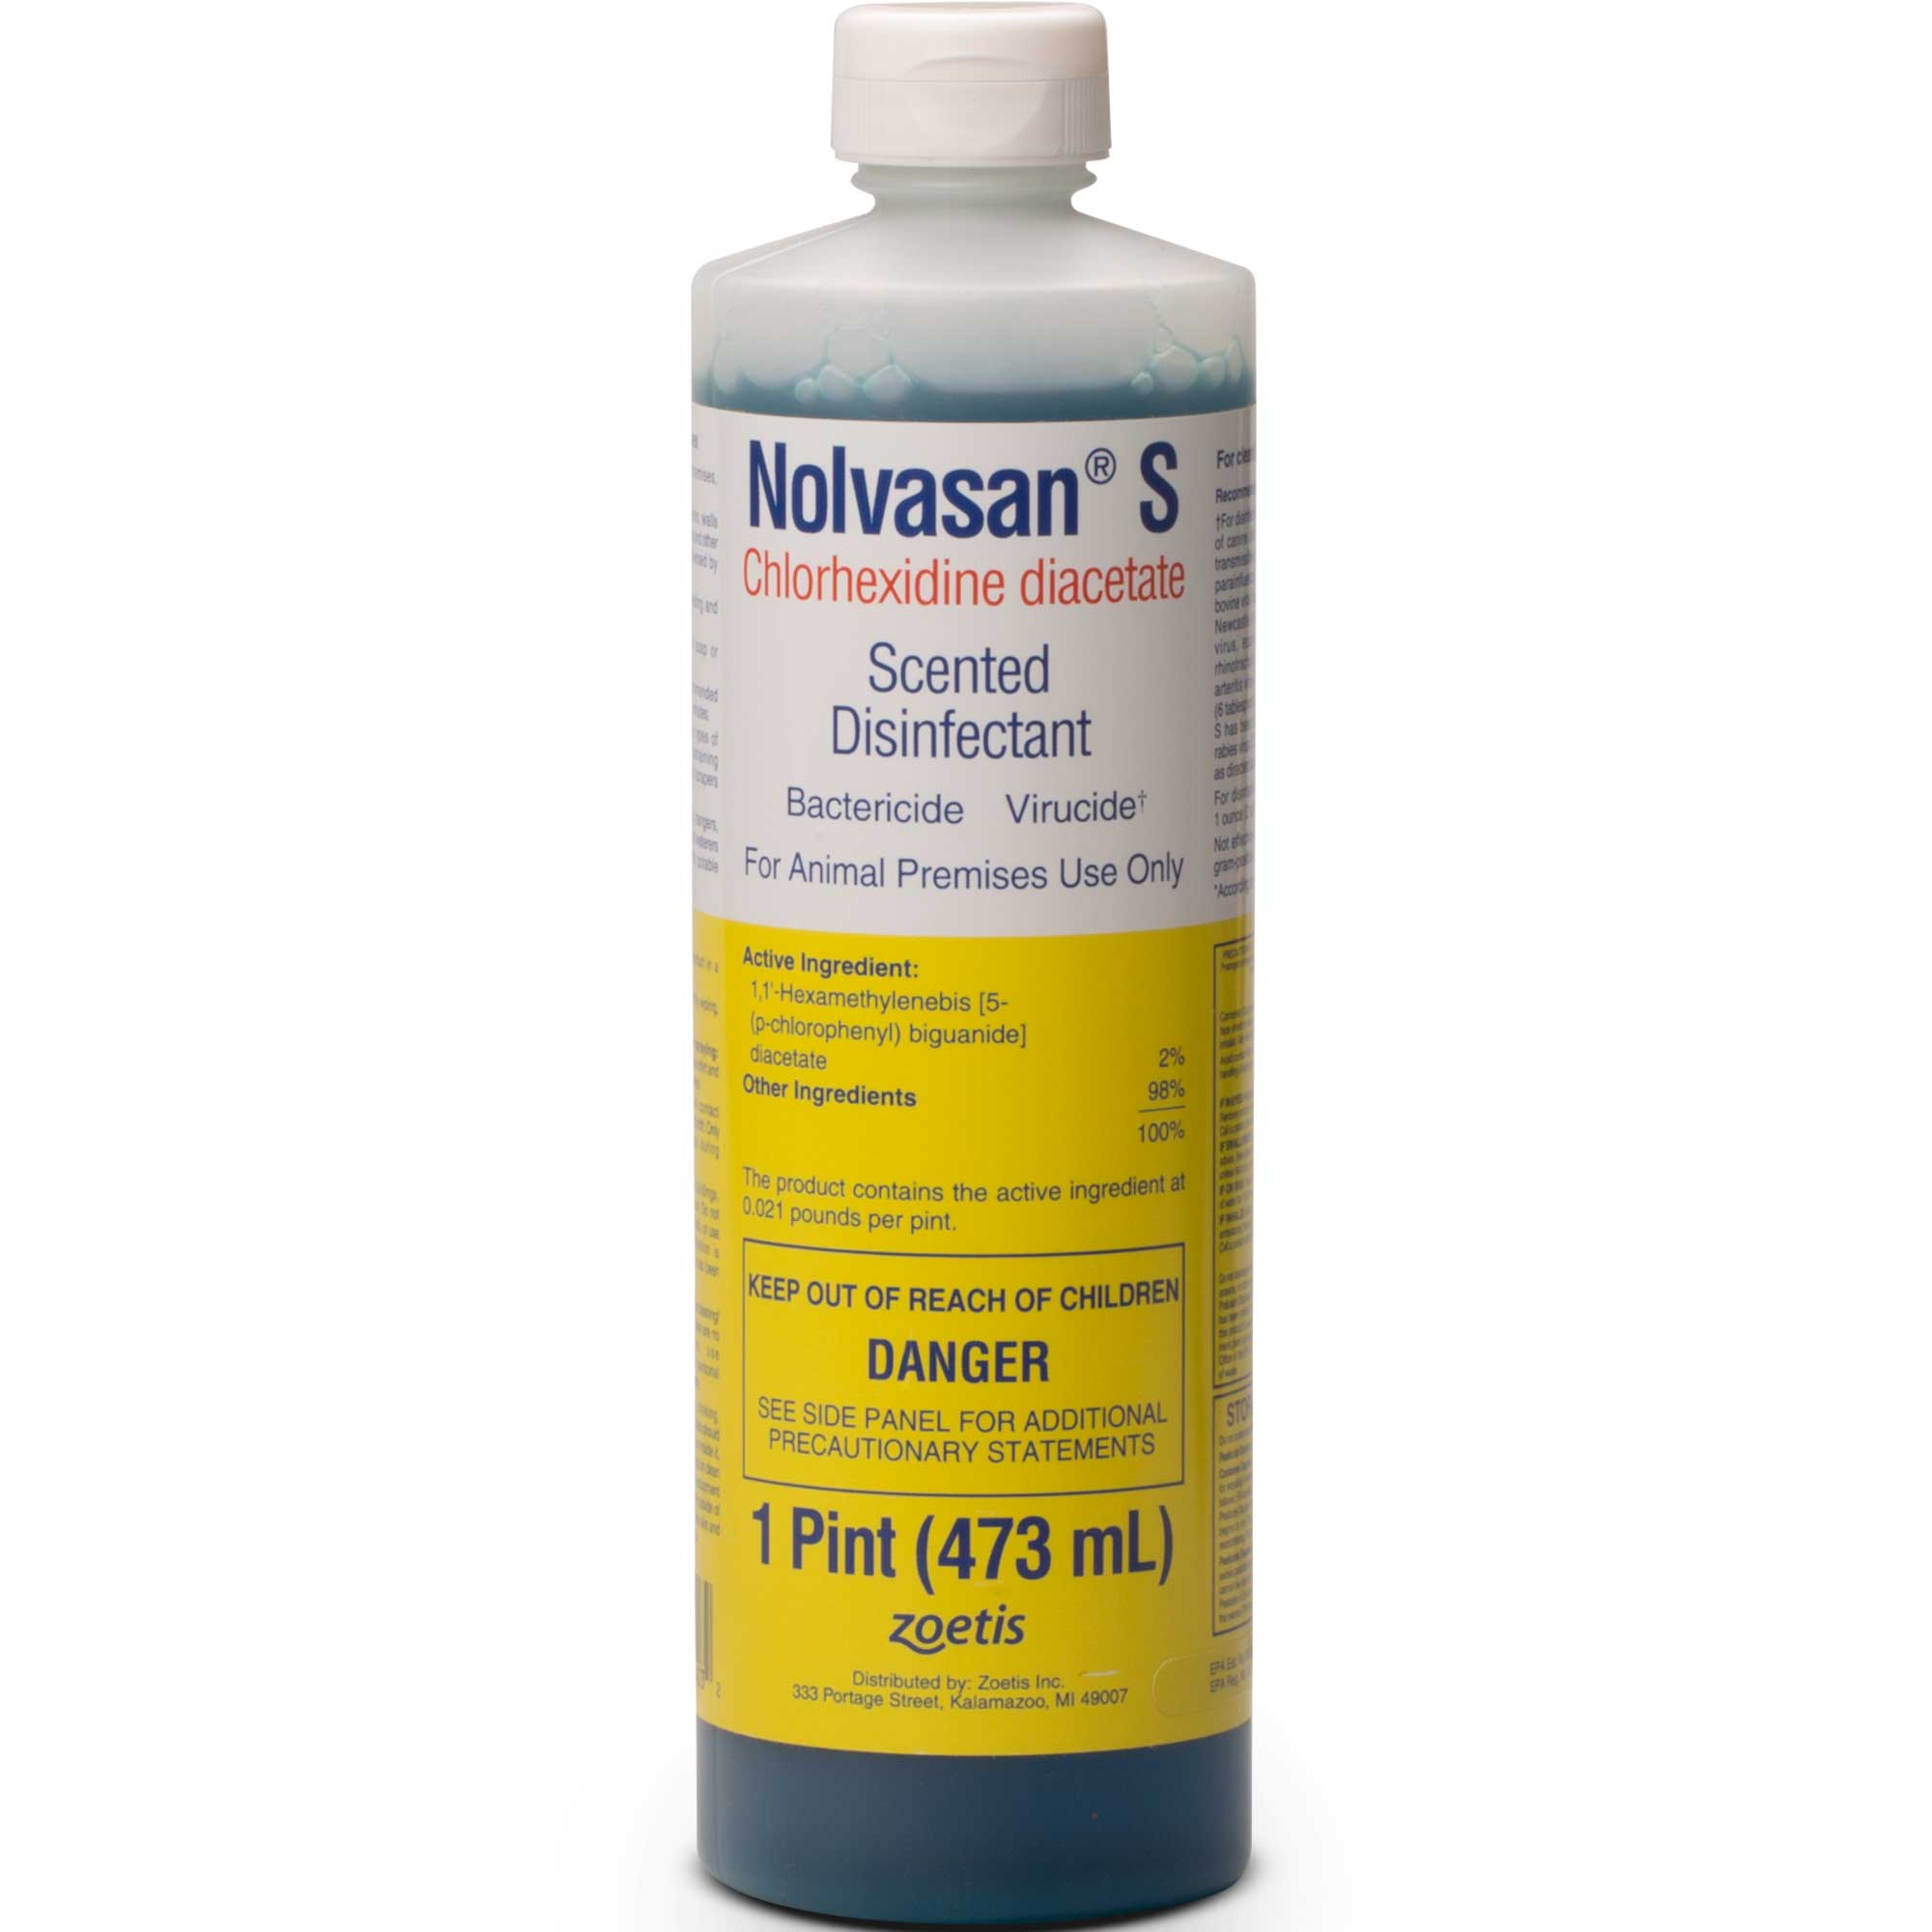 Nolvasan S Disinfectant Usage